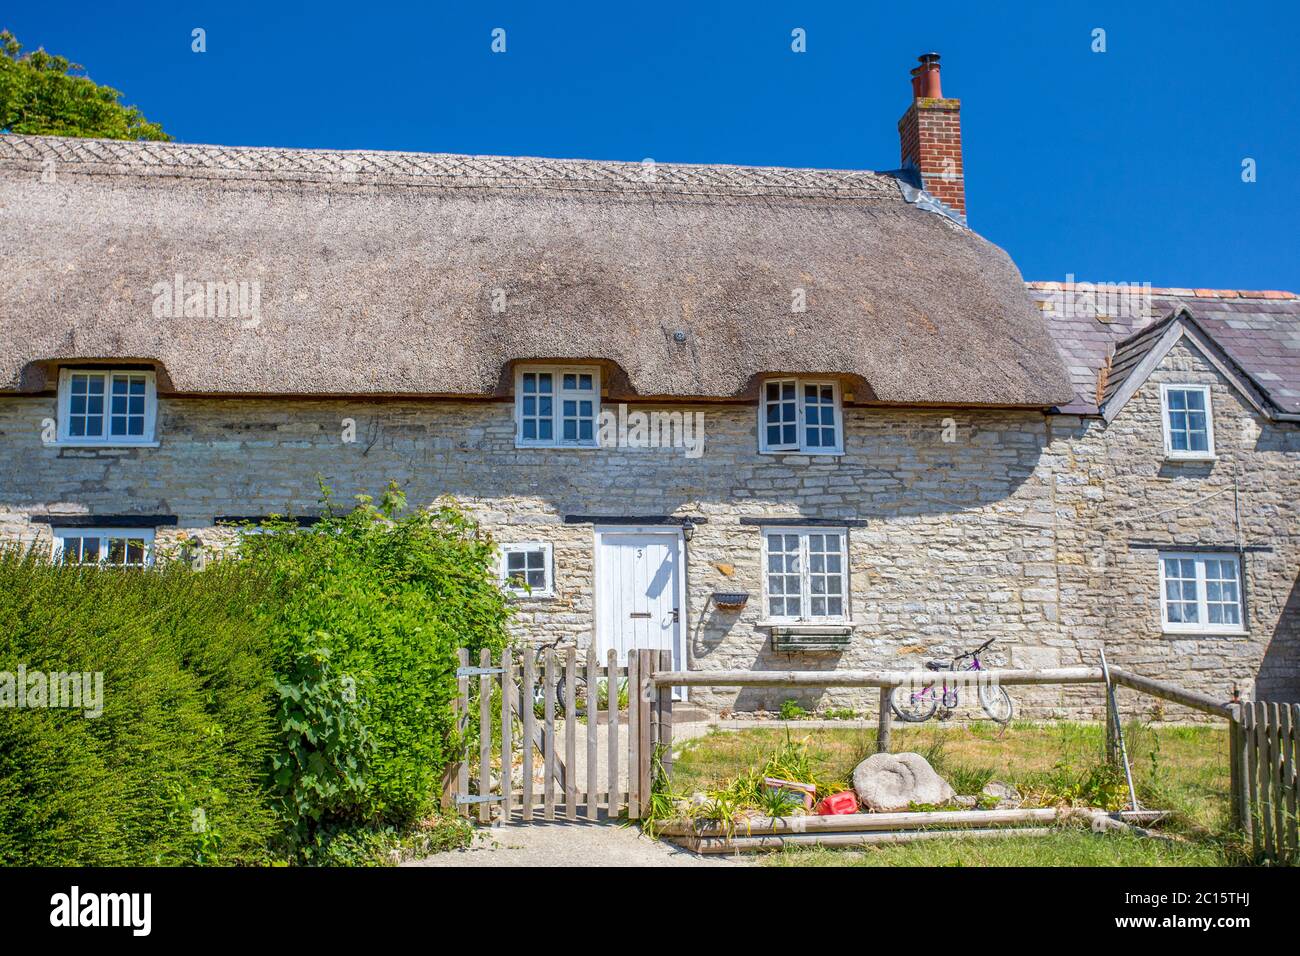 Quaint thatched cottage in Kimmeridge village, Dorset, England, UK Stock Photo